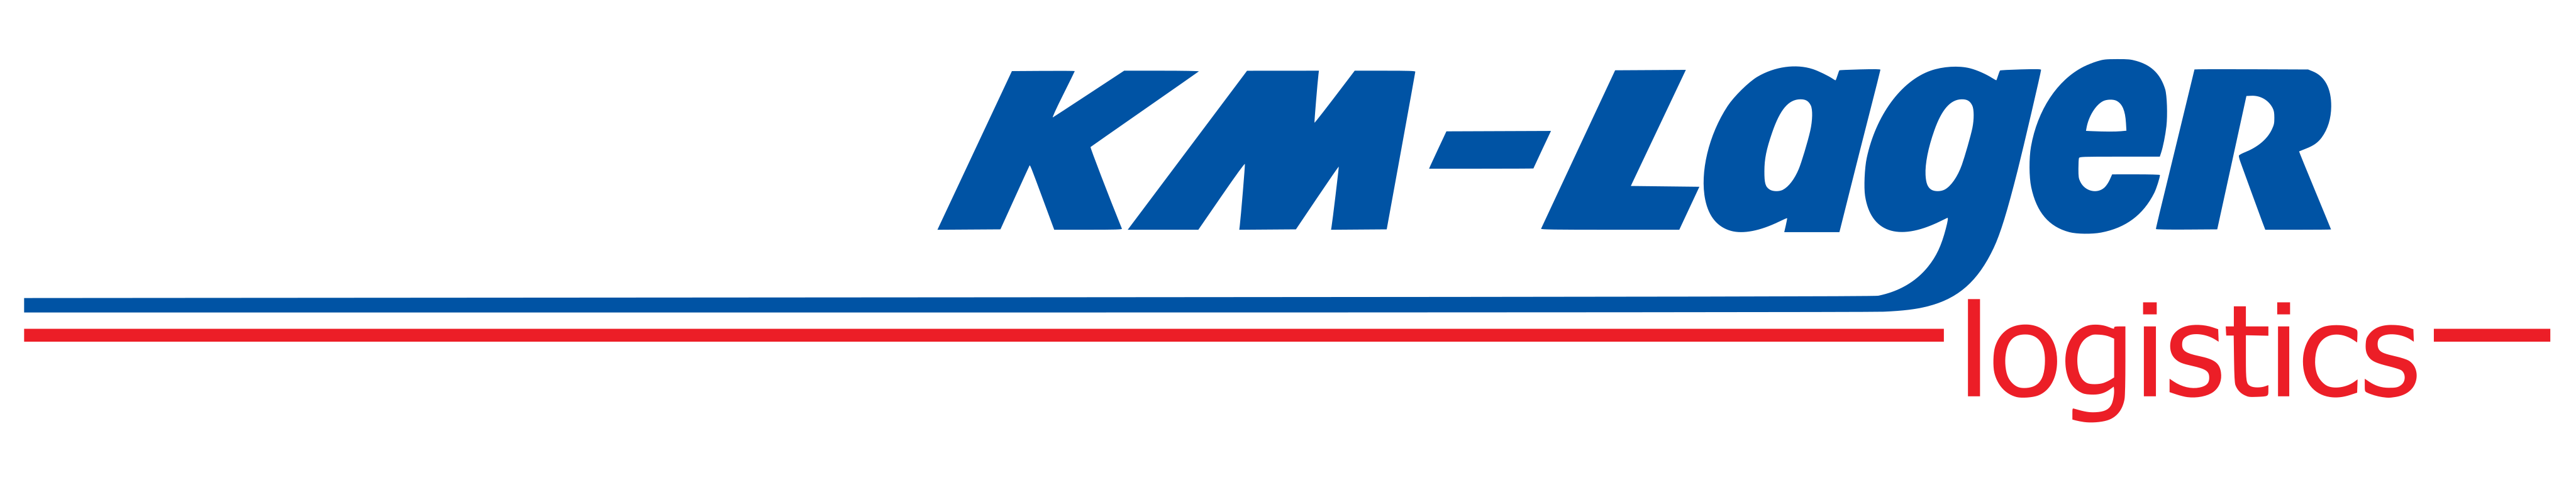 KM-Lager logistics GmbH